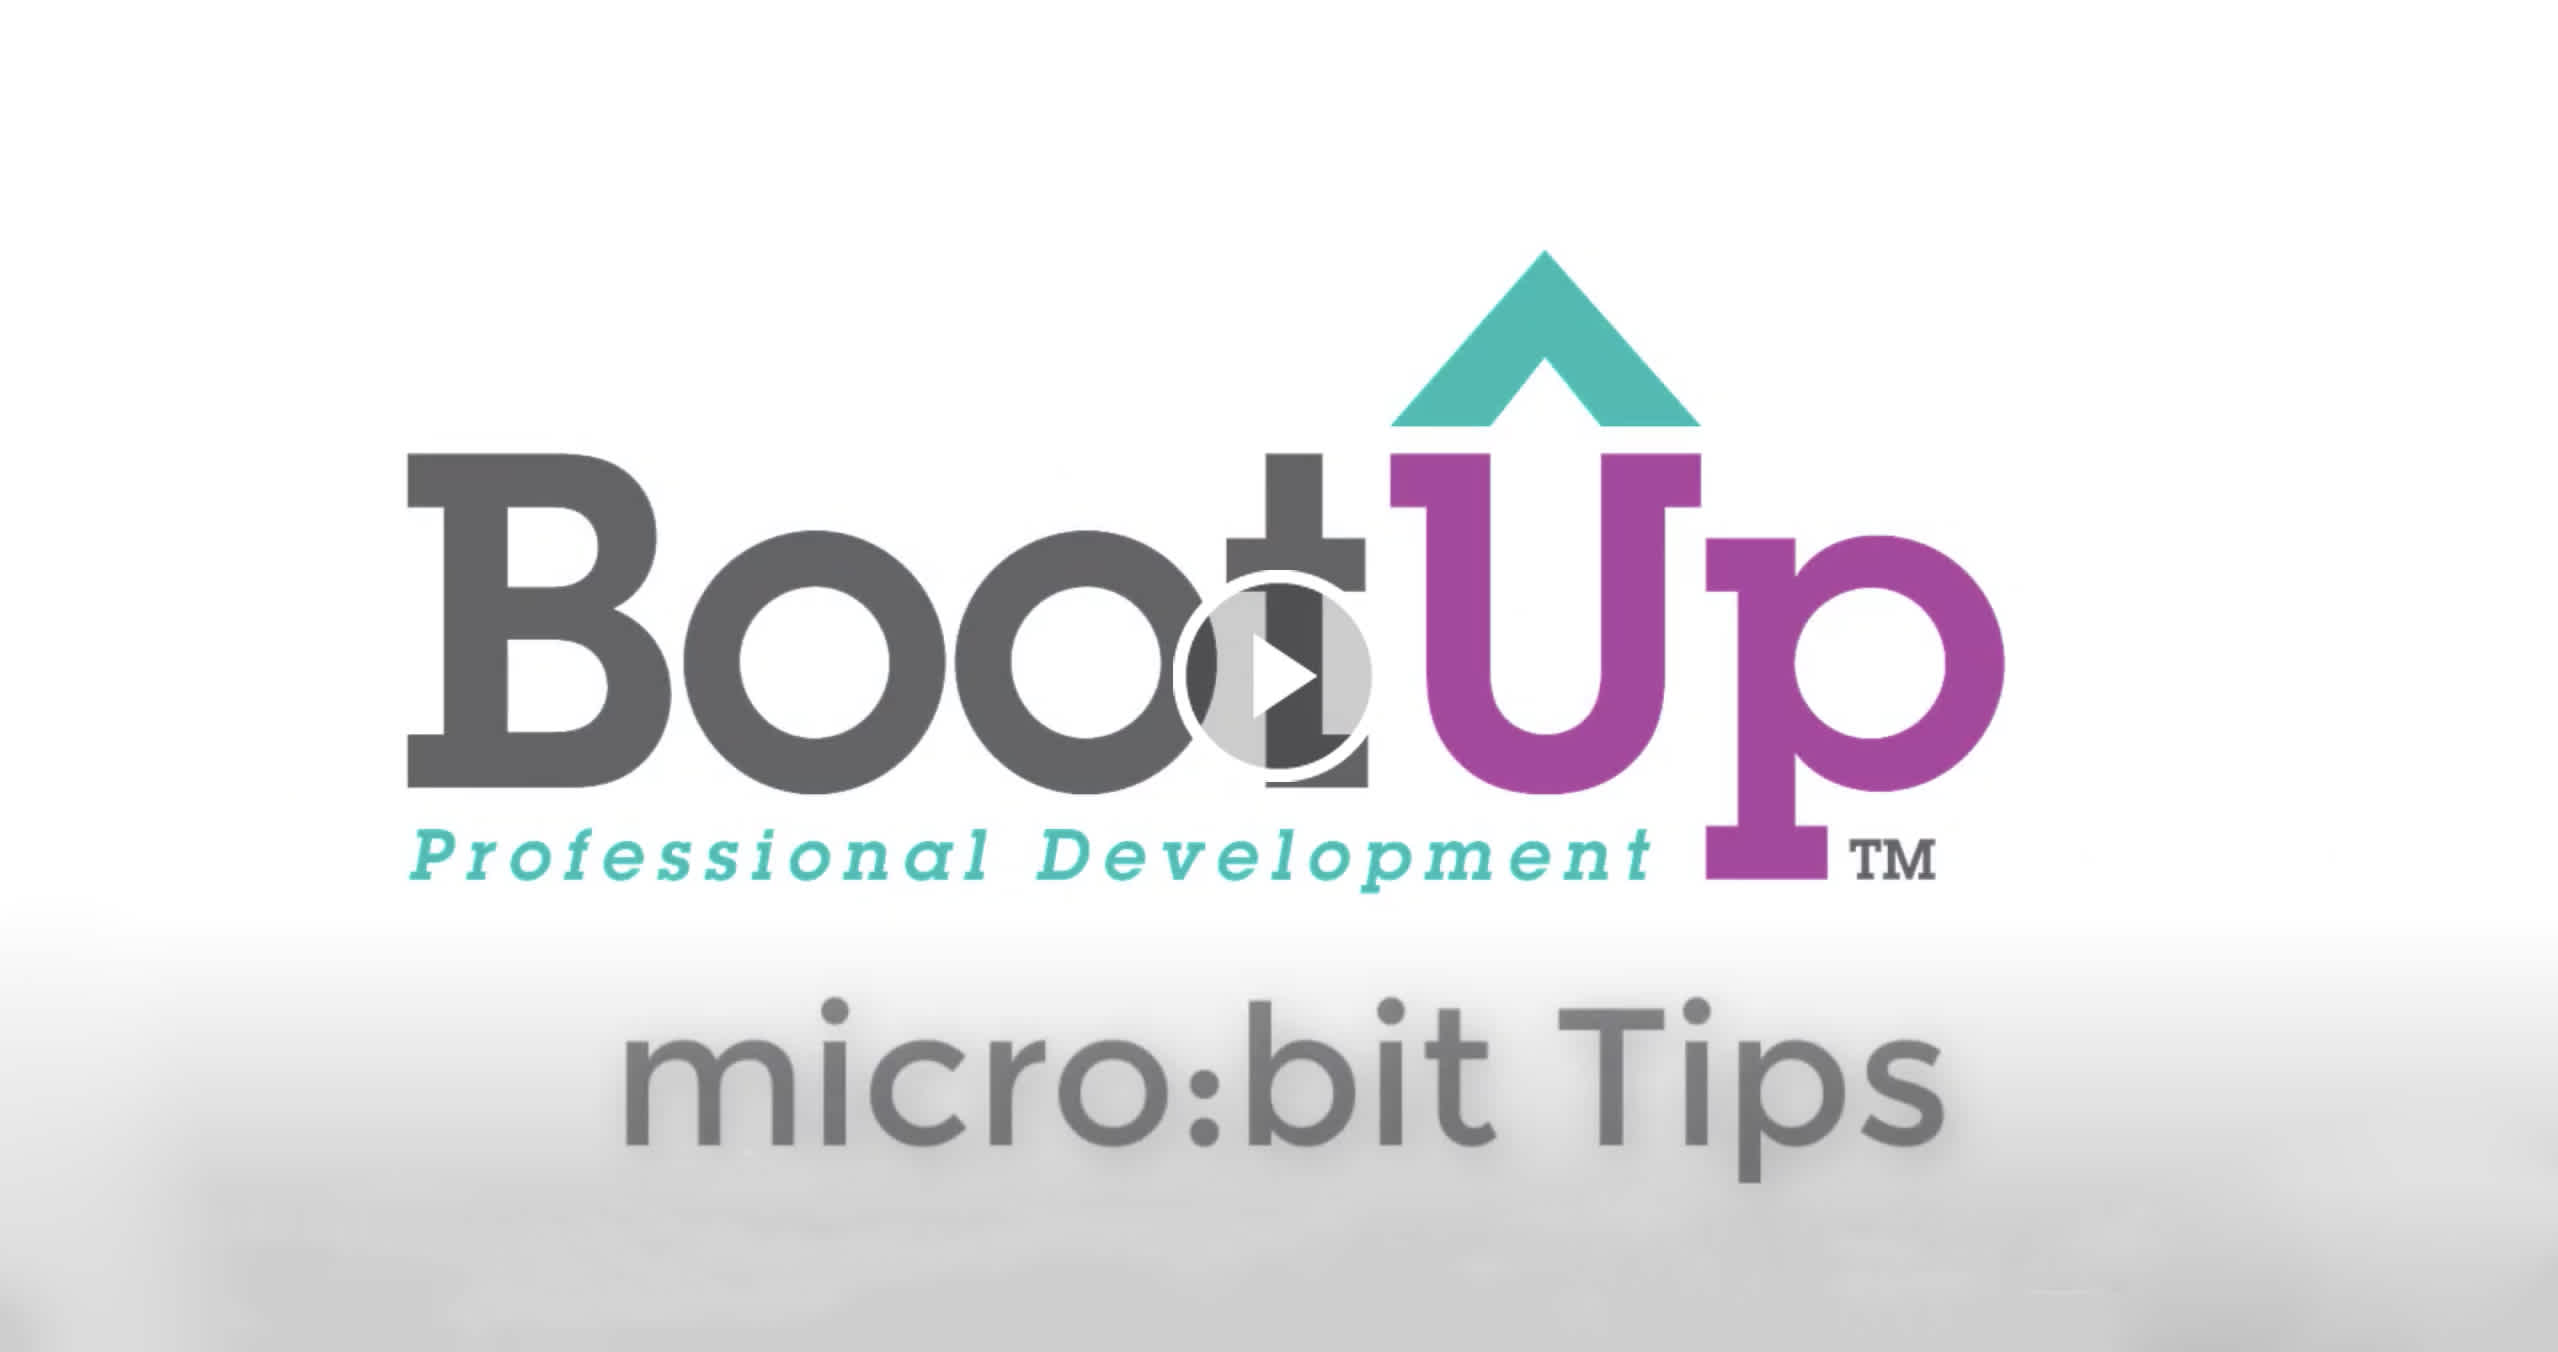 micro:bit tips